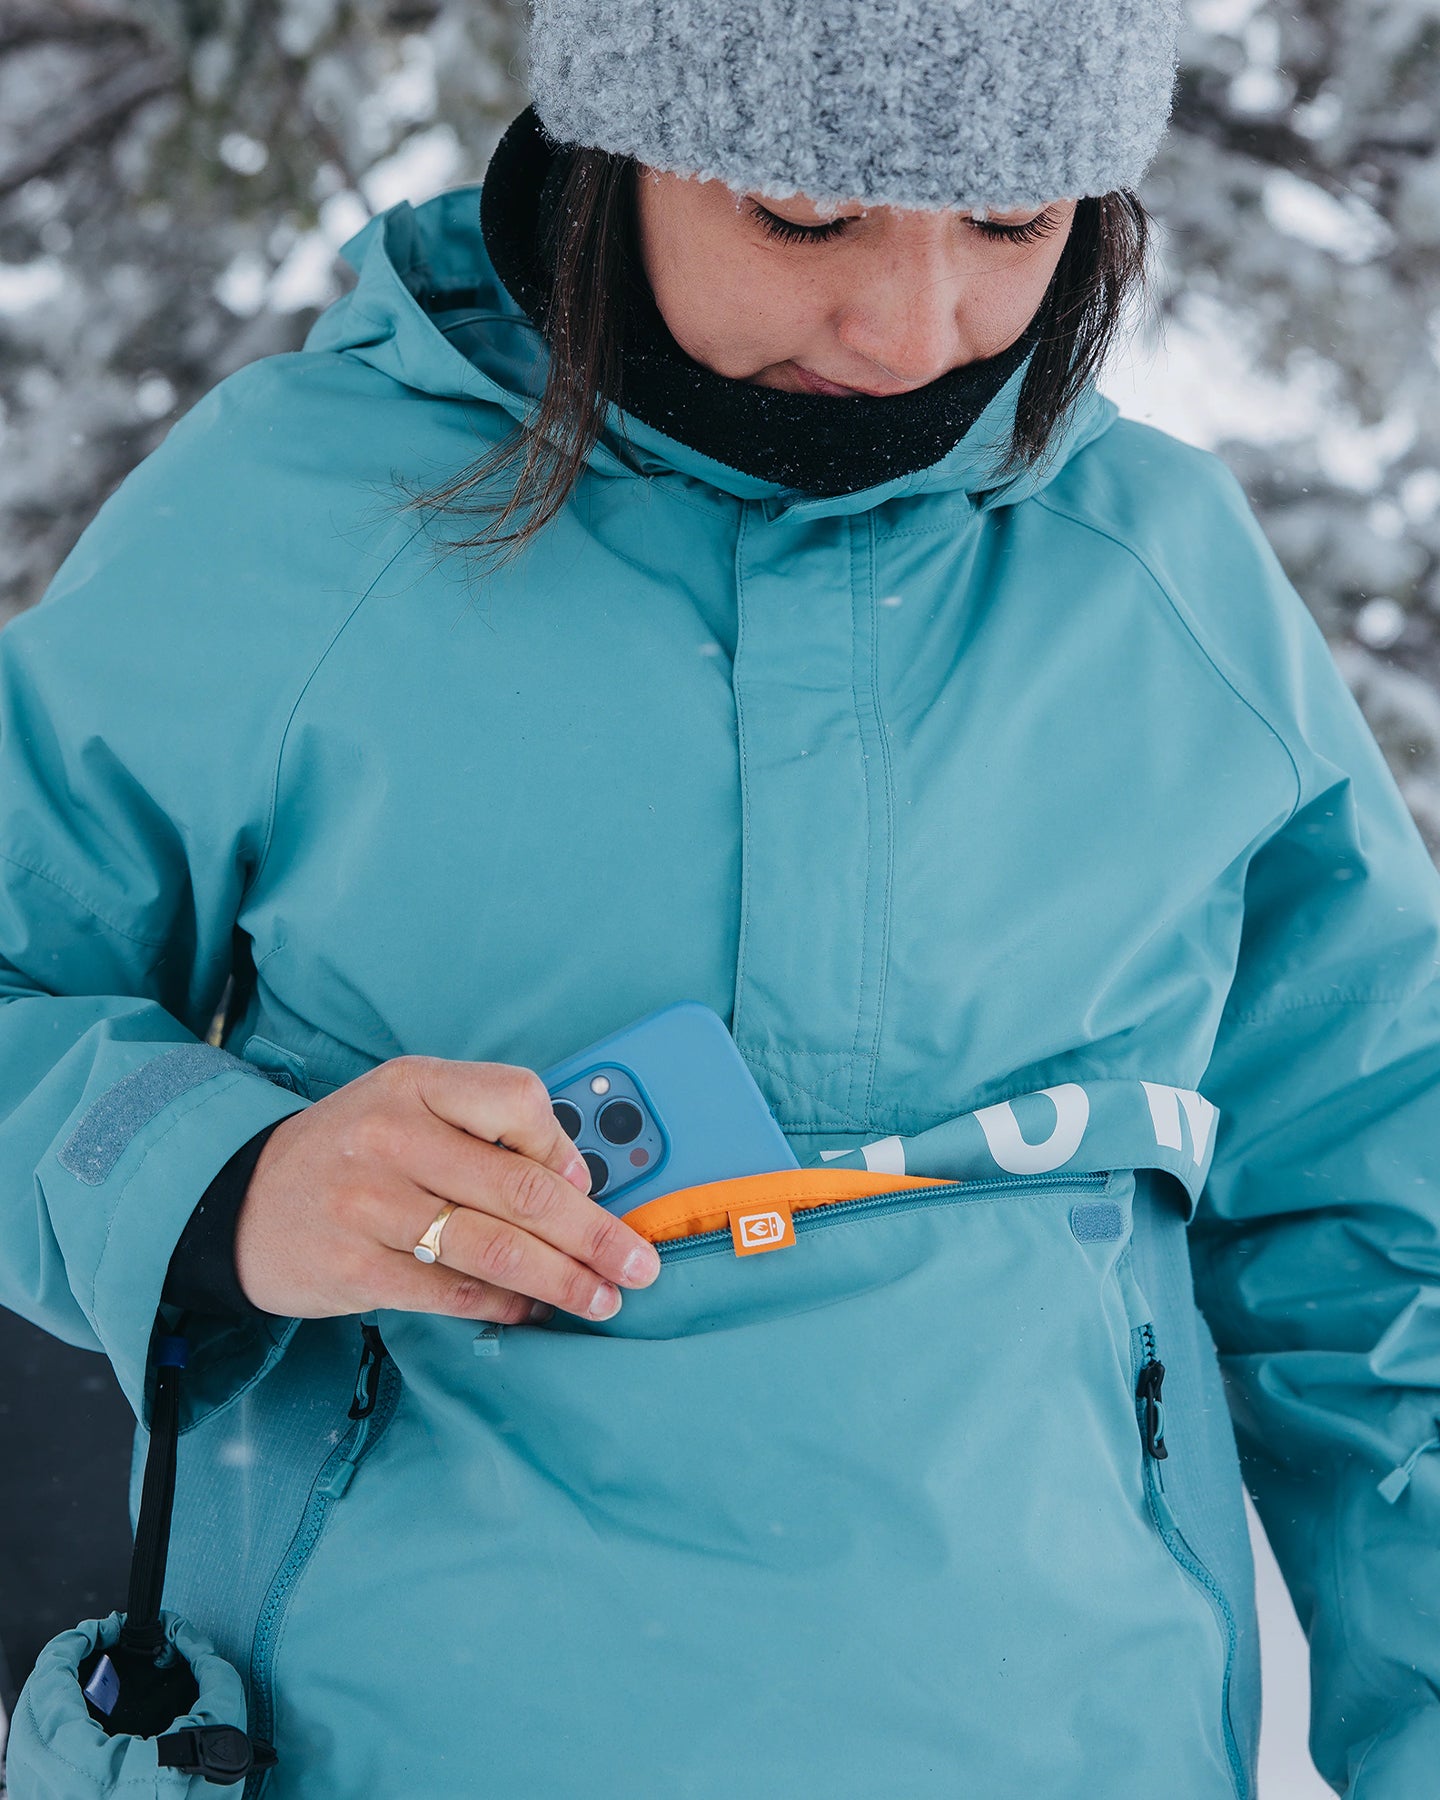 Burton Women's Frostner 2L Anorak Snow Jacket - Rock Lichen/Stout White Women's Snow Jackets - Trojan Wake Ski Snow